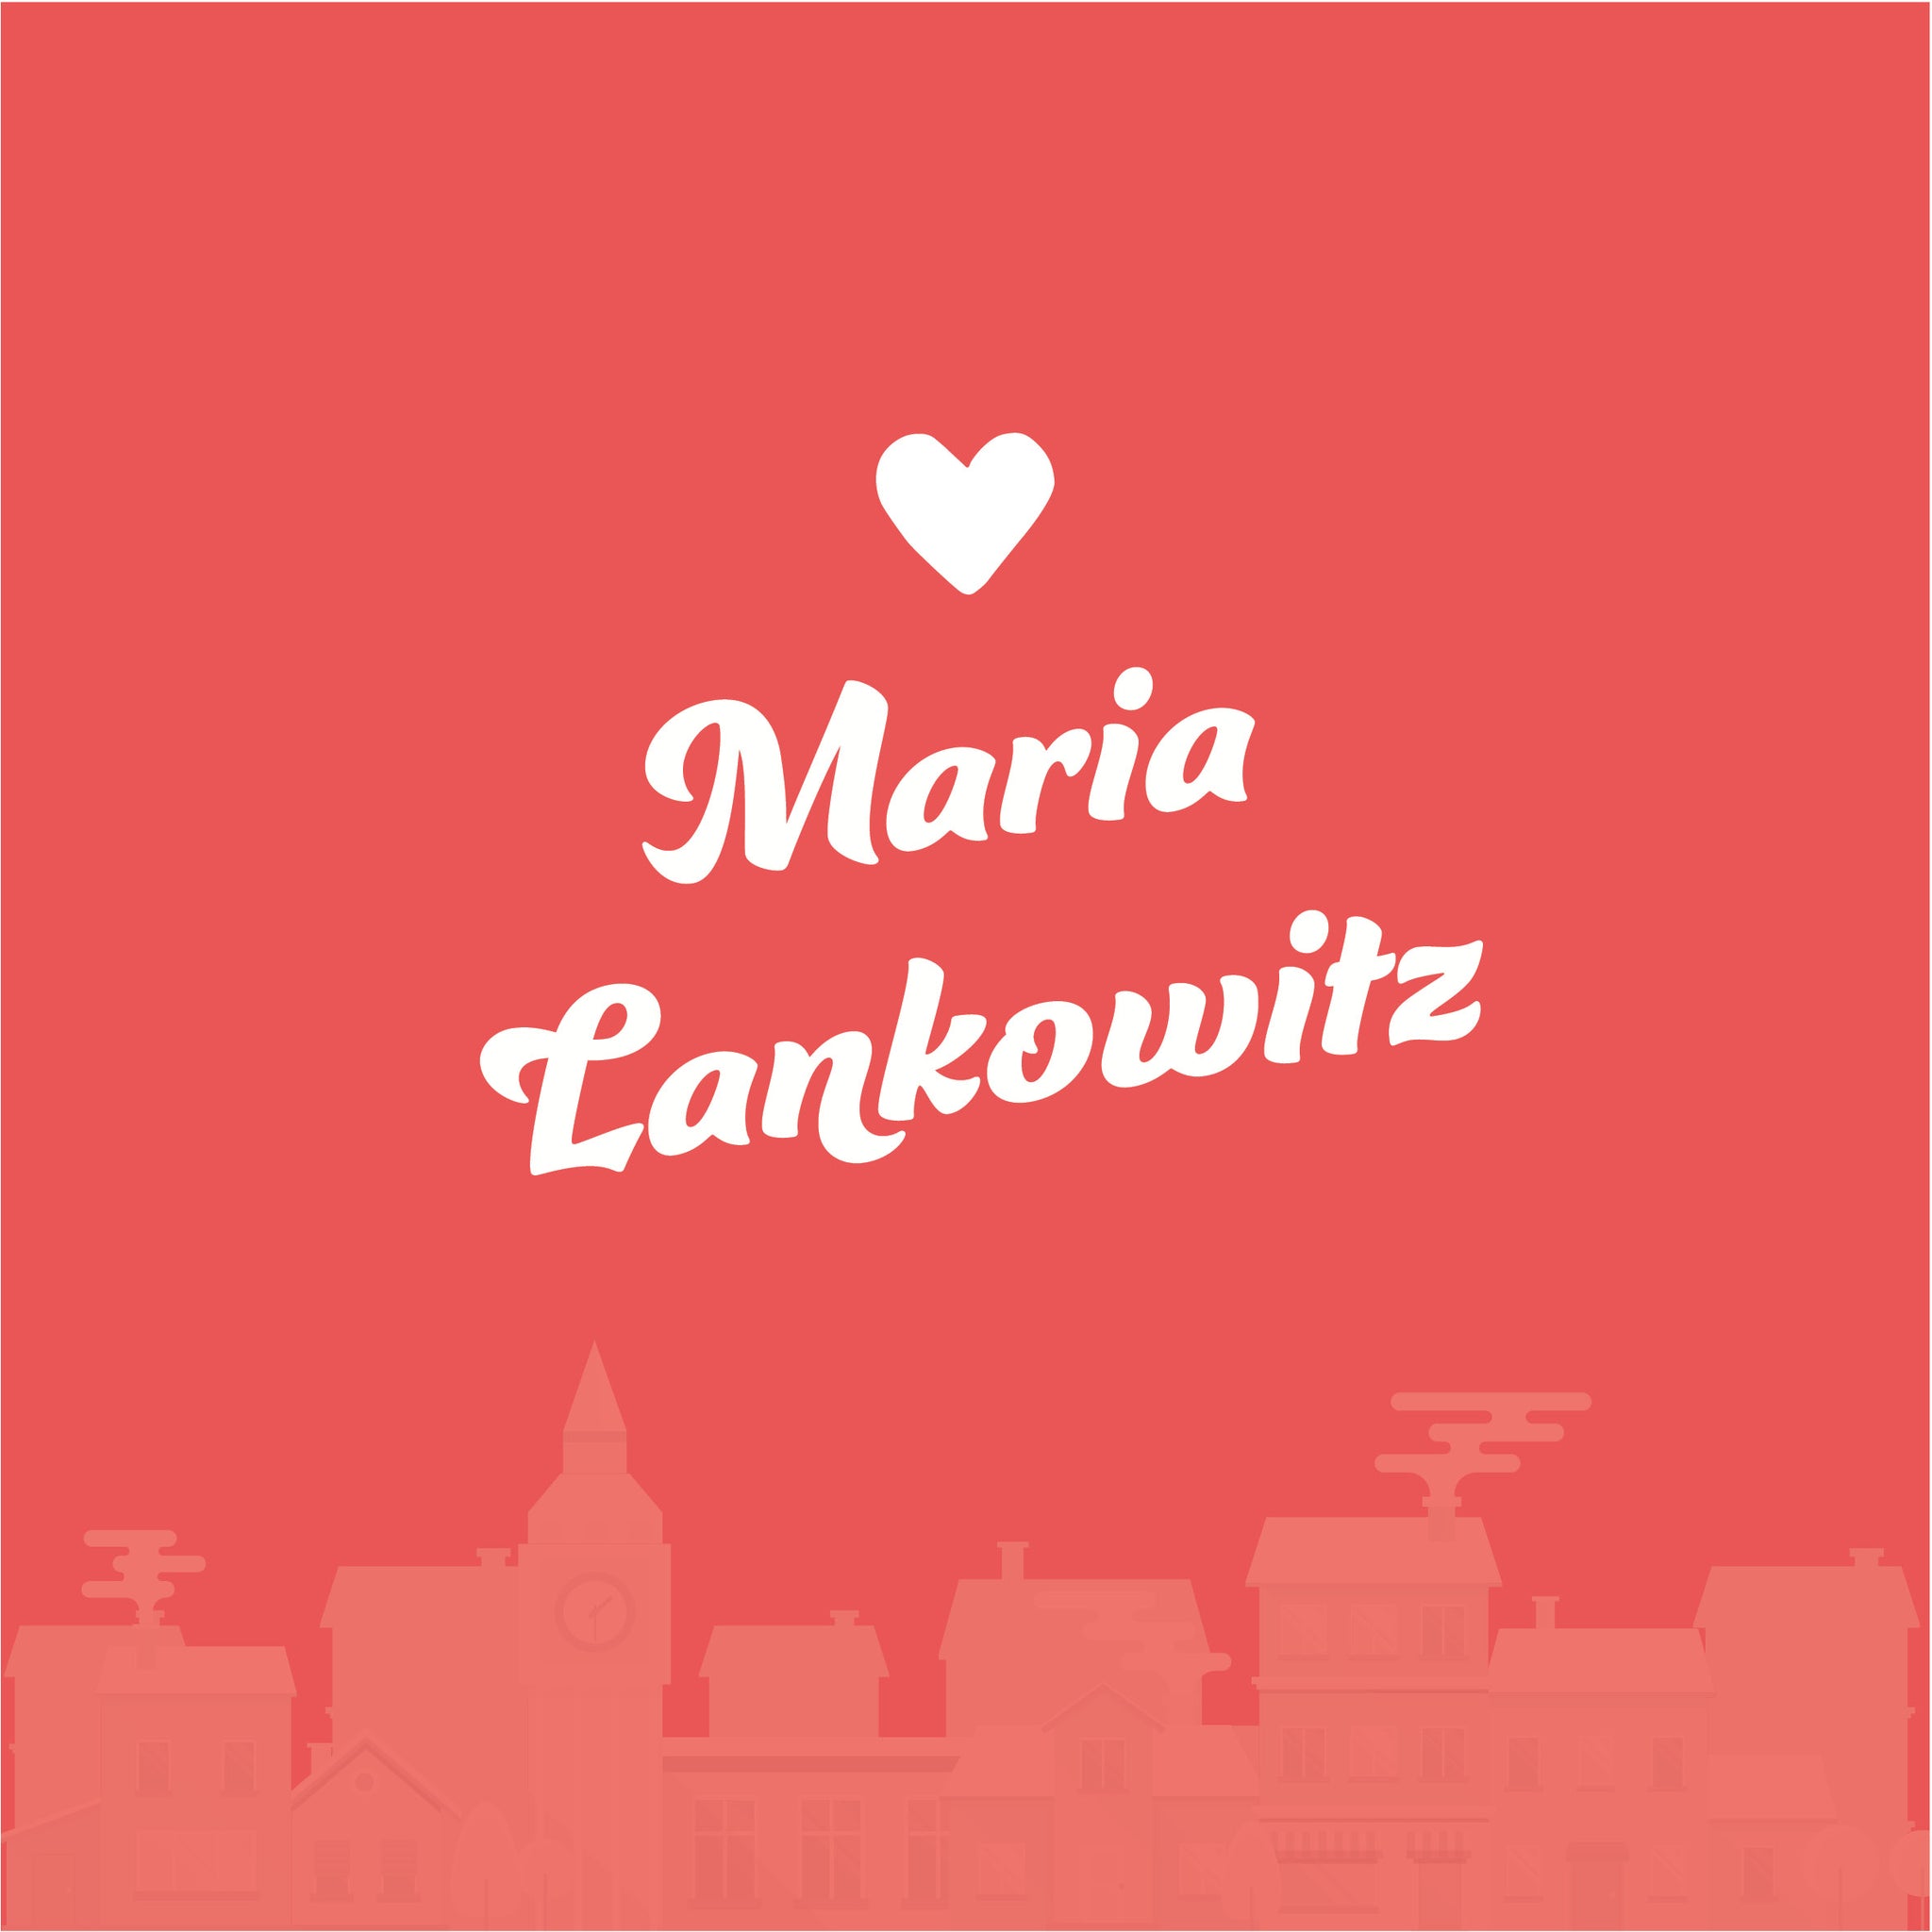 Maria Lankowitz